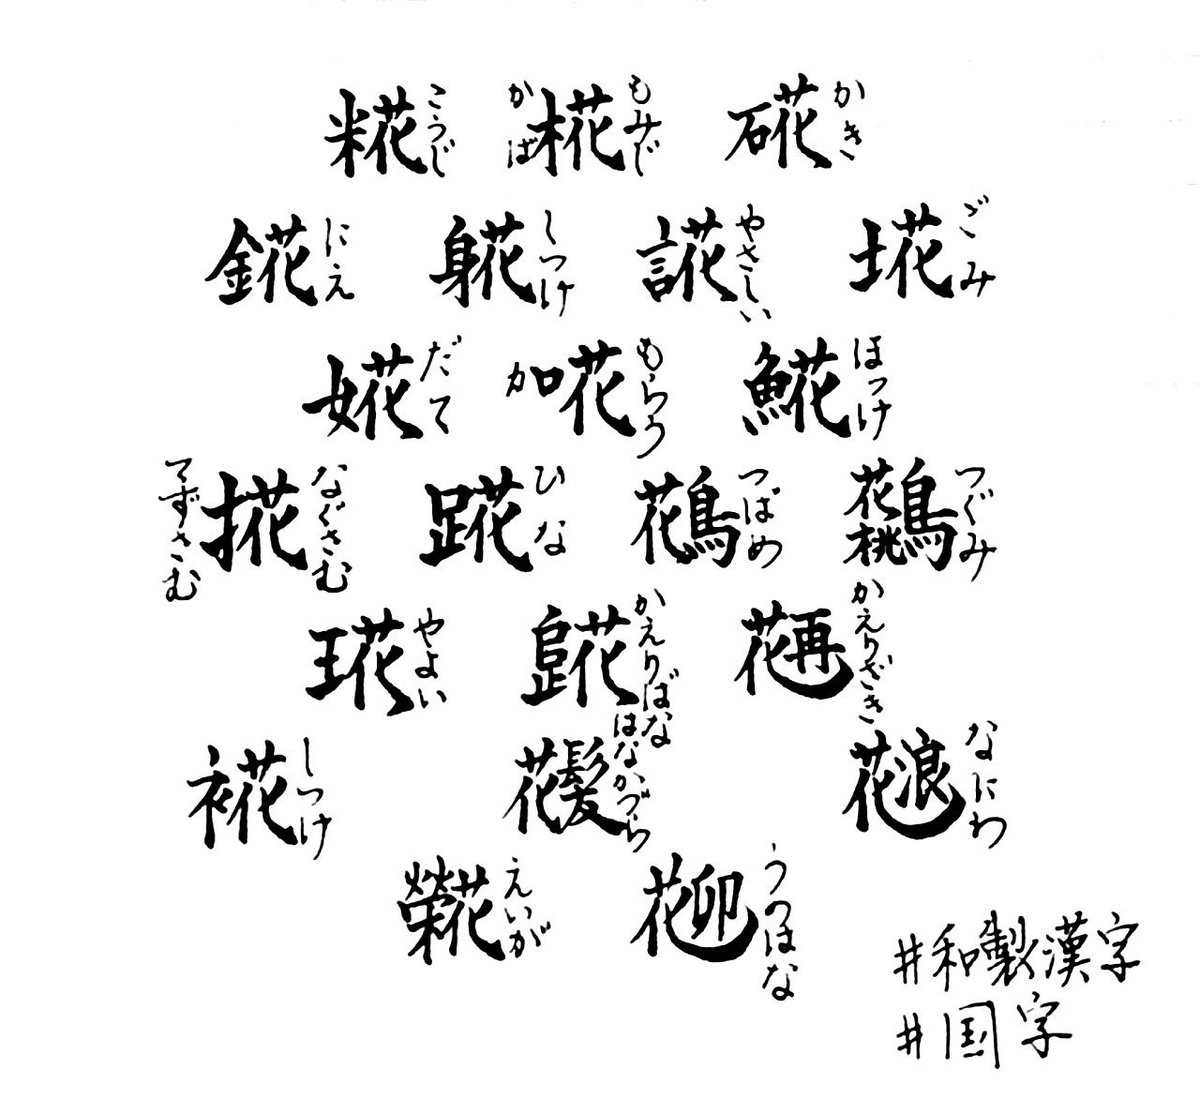 Mosgis Twitter પર 学生の頃漢字の勉強をしていました 木へんに花と書いて椛 もみじ と読ませる感性は素敵だと感じていました